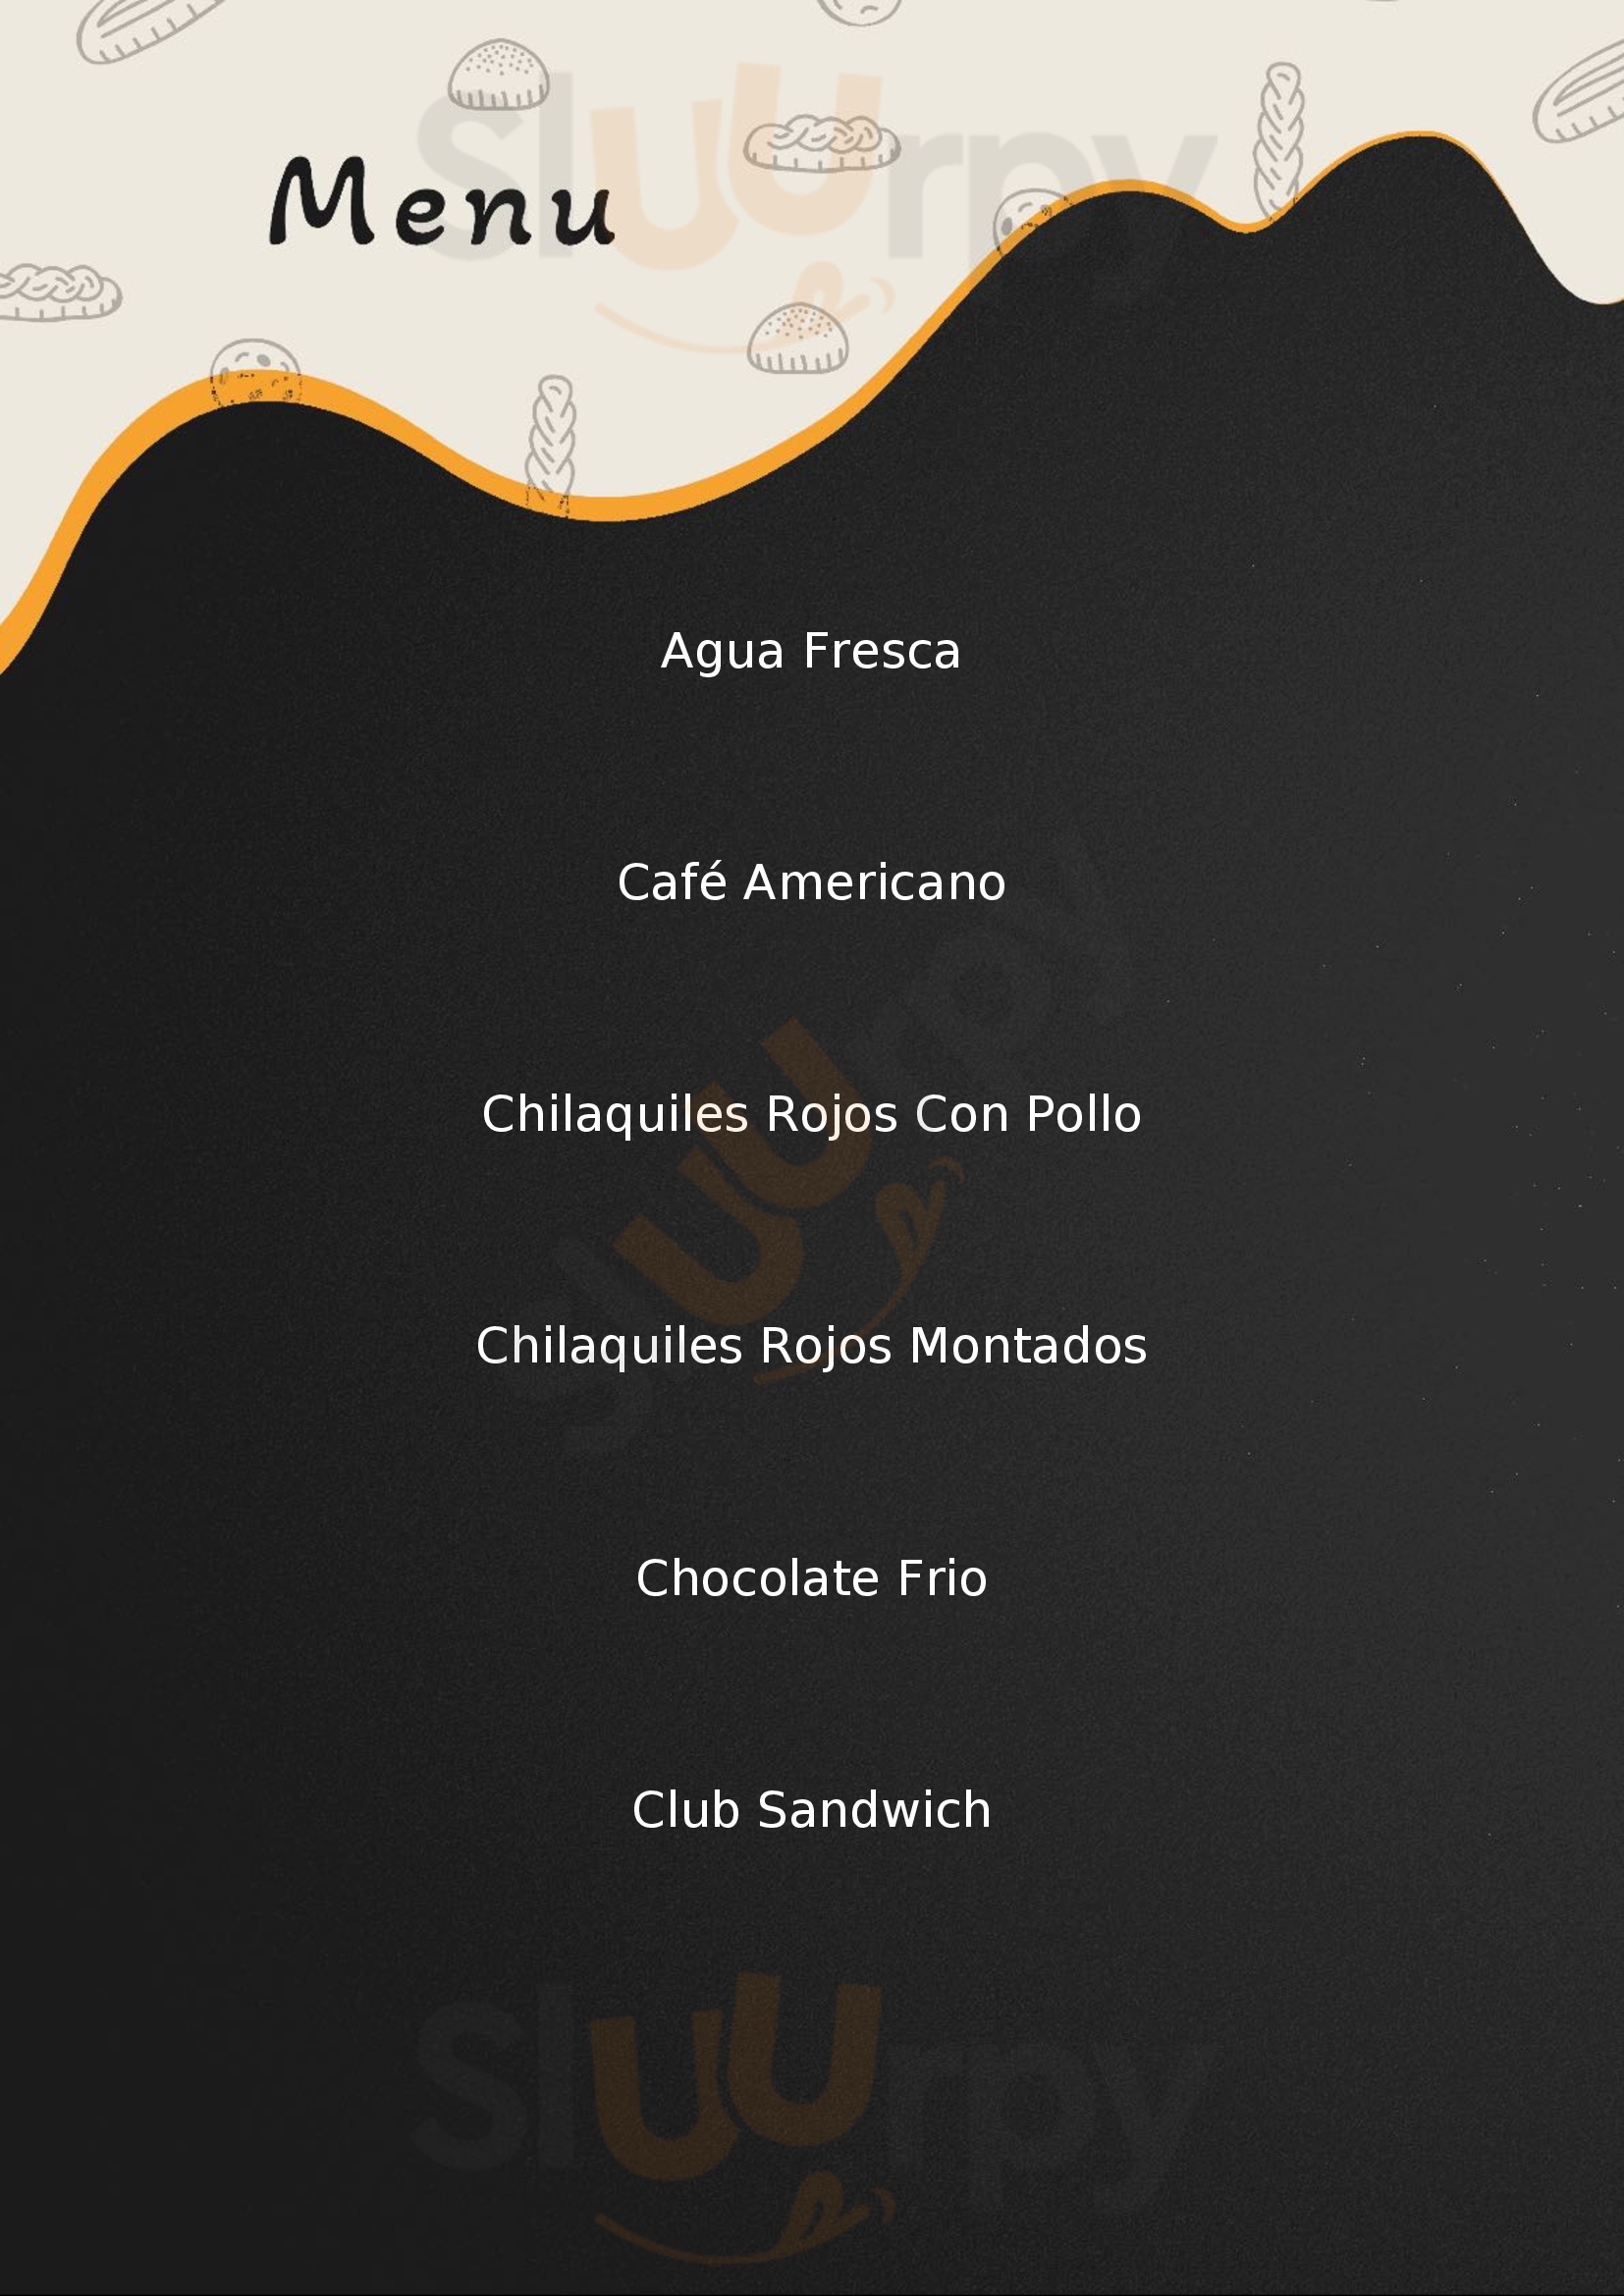 La Cristy Co Restaurant & Café Chihuahua Menu - 1